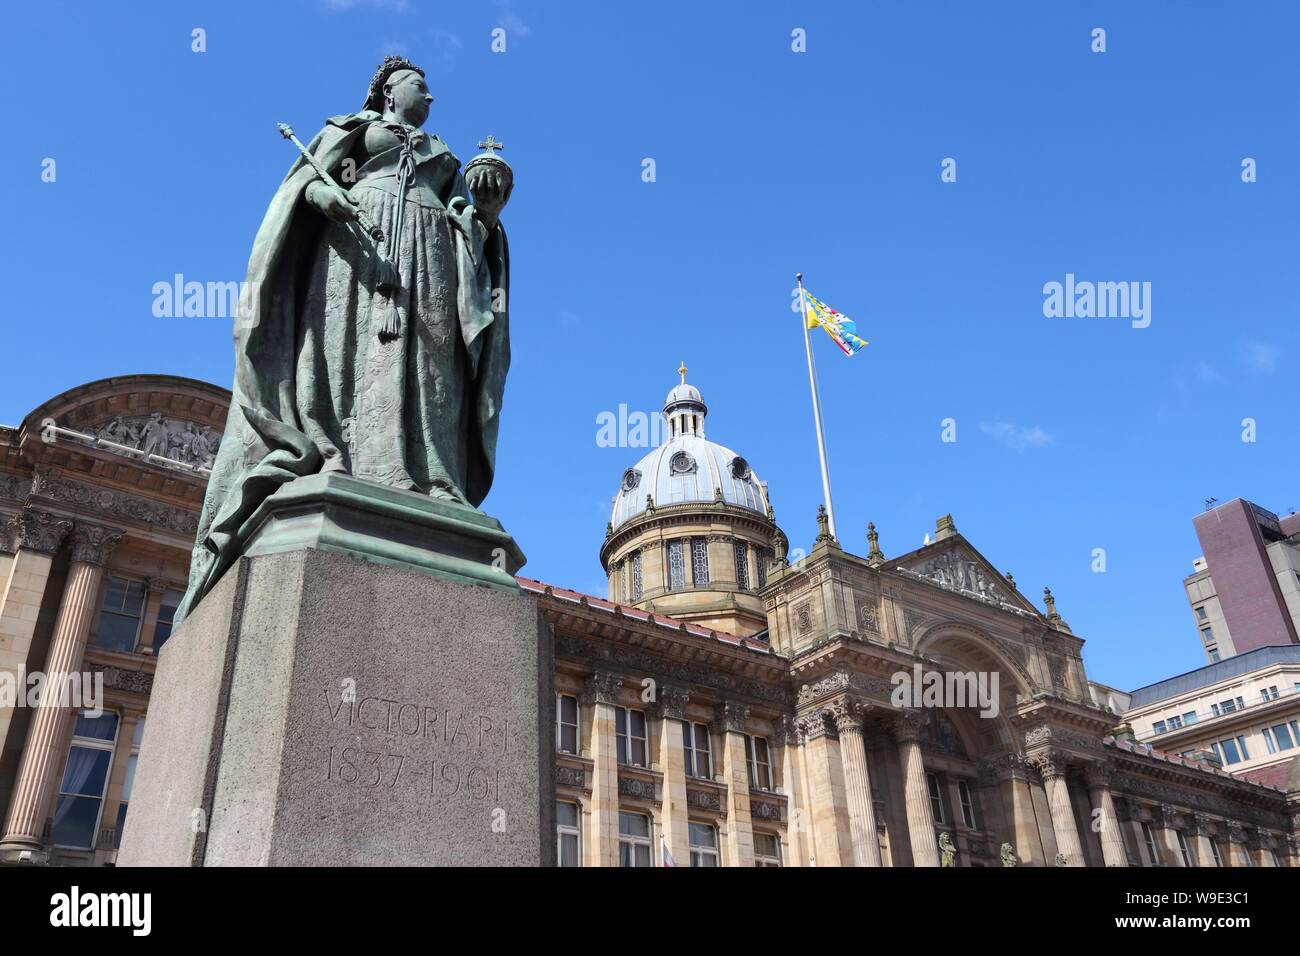 Birmingham, UK - Victoria Square architecture with Queen Victoria monument. Stock Photo